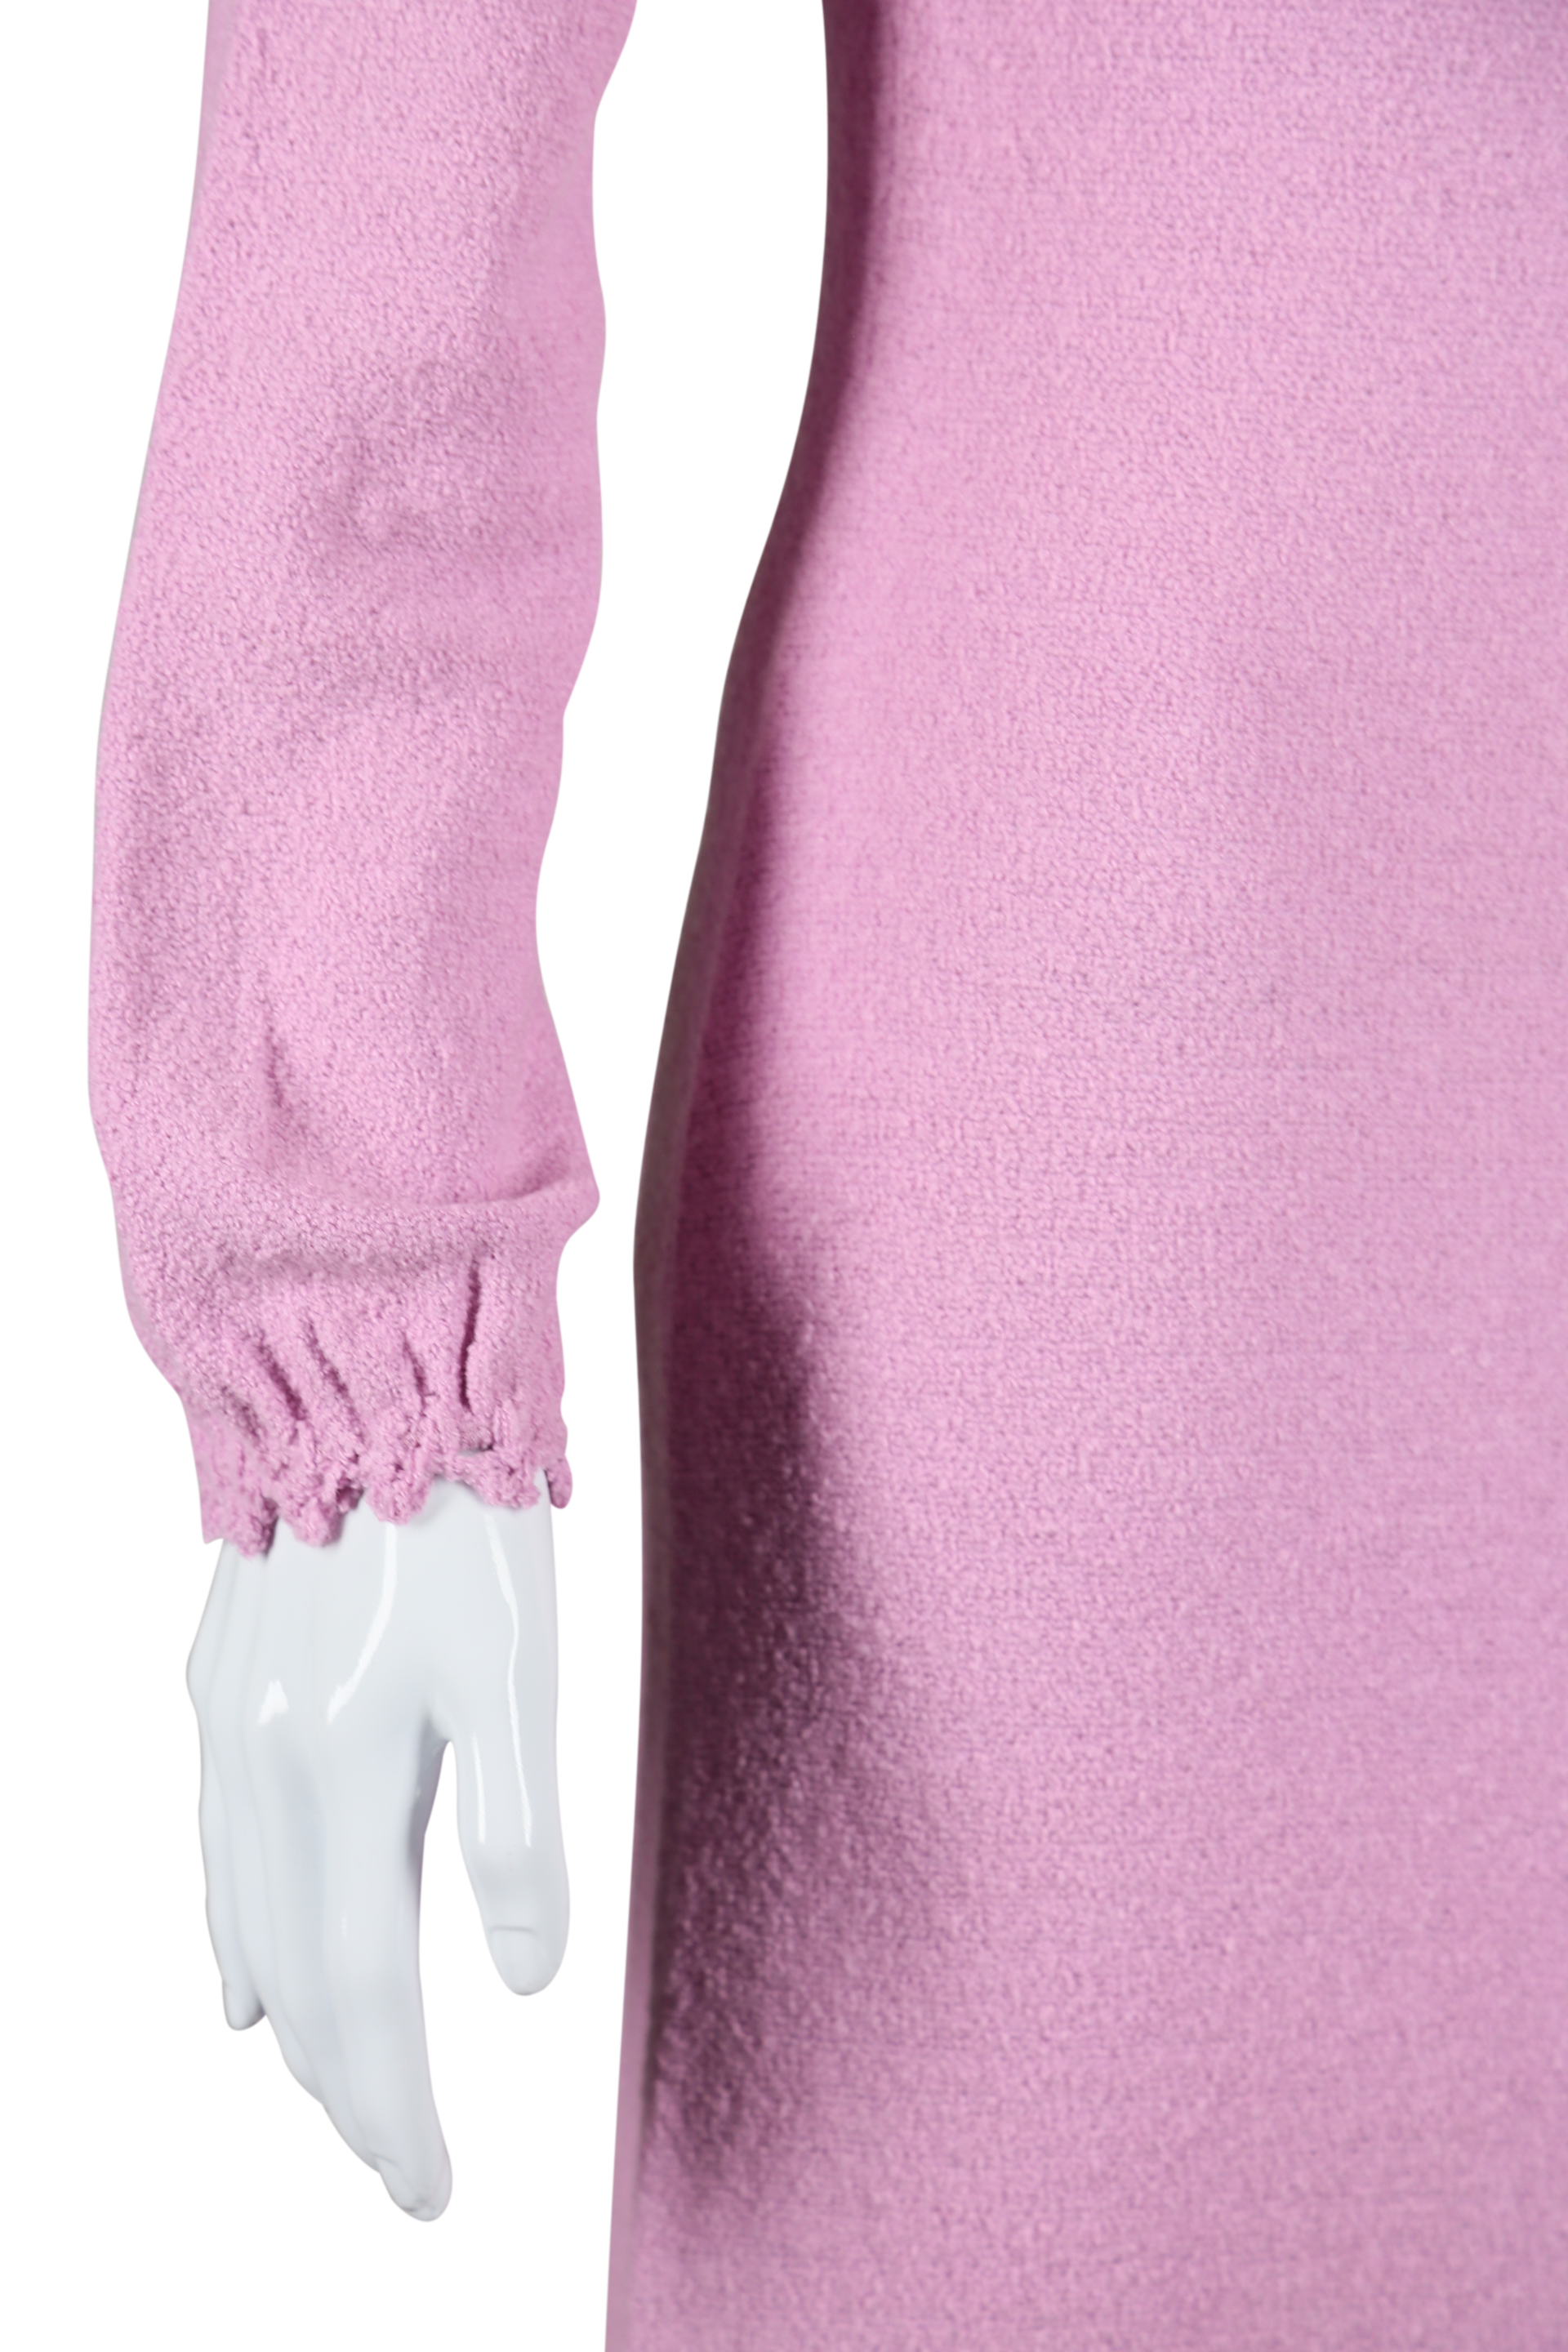 Lavender Knit Sweater Maxi Dress - Embers / Cinders Vintage